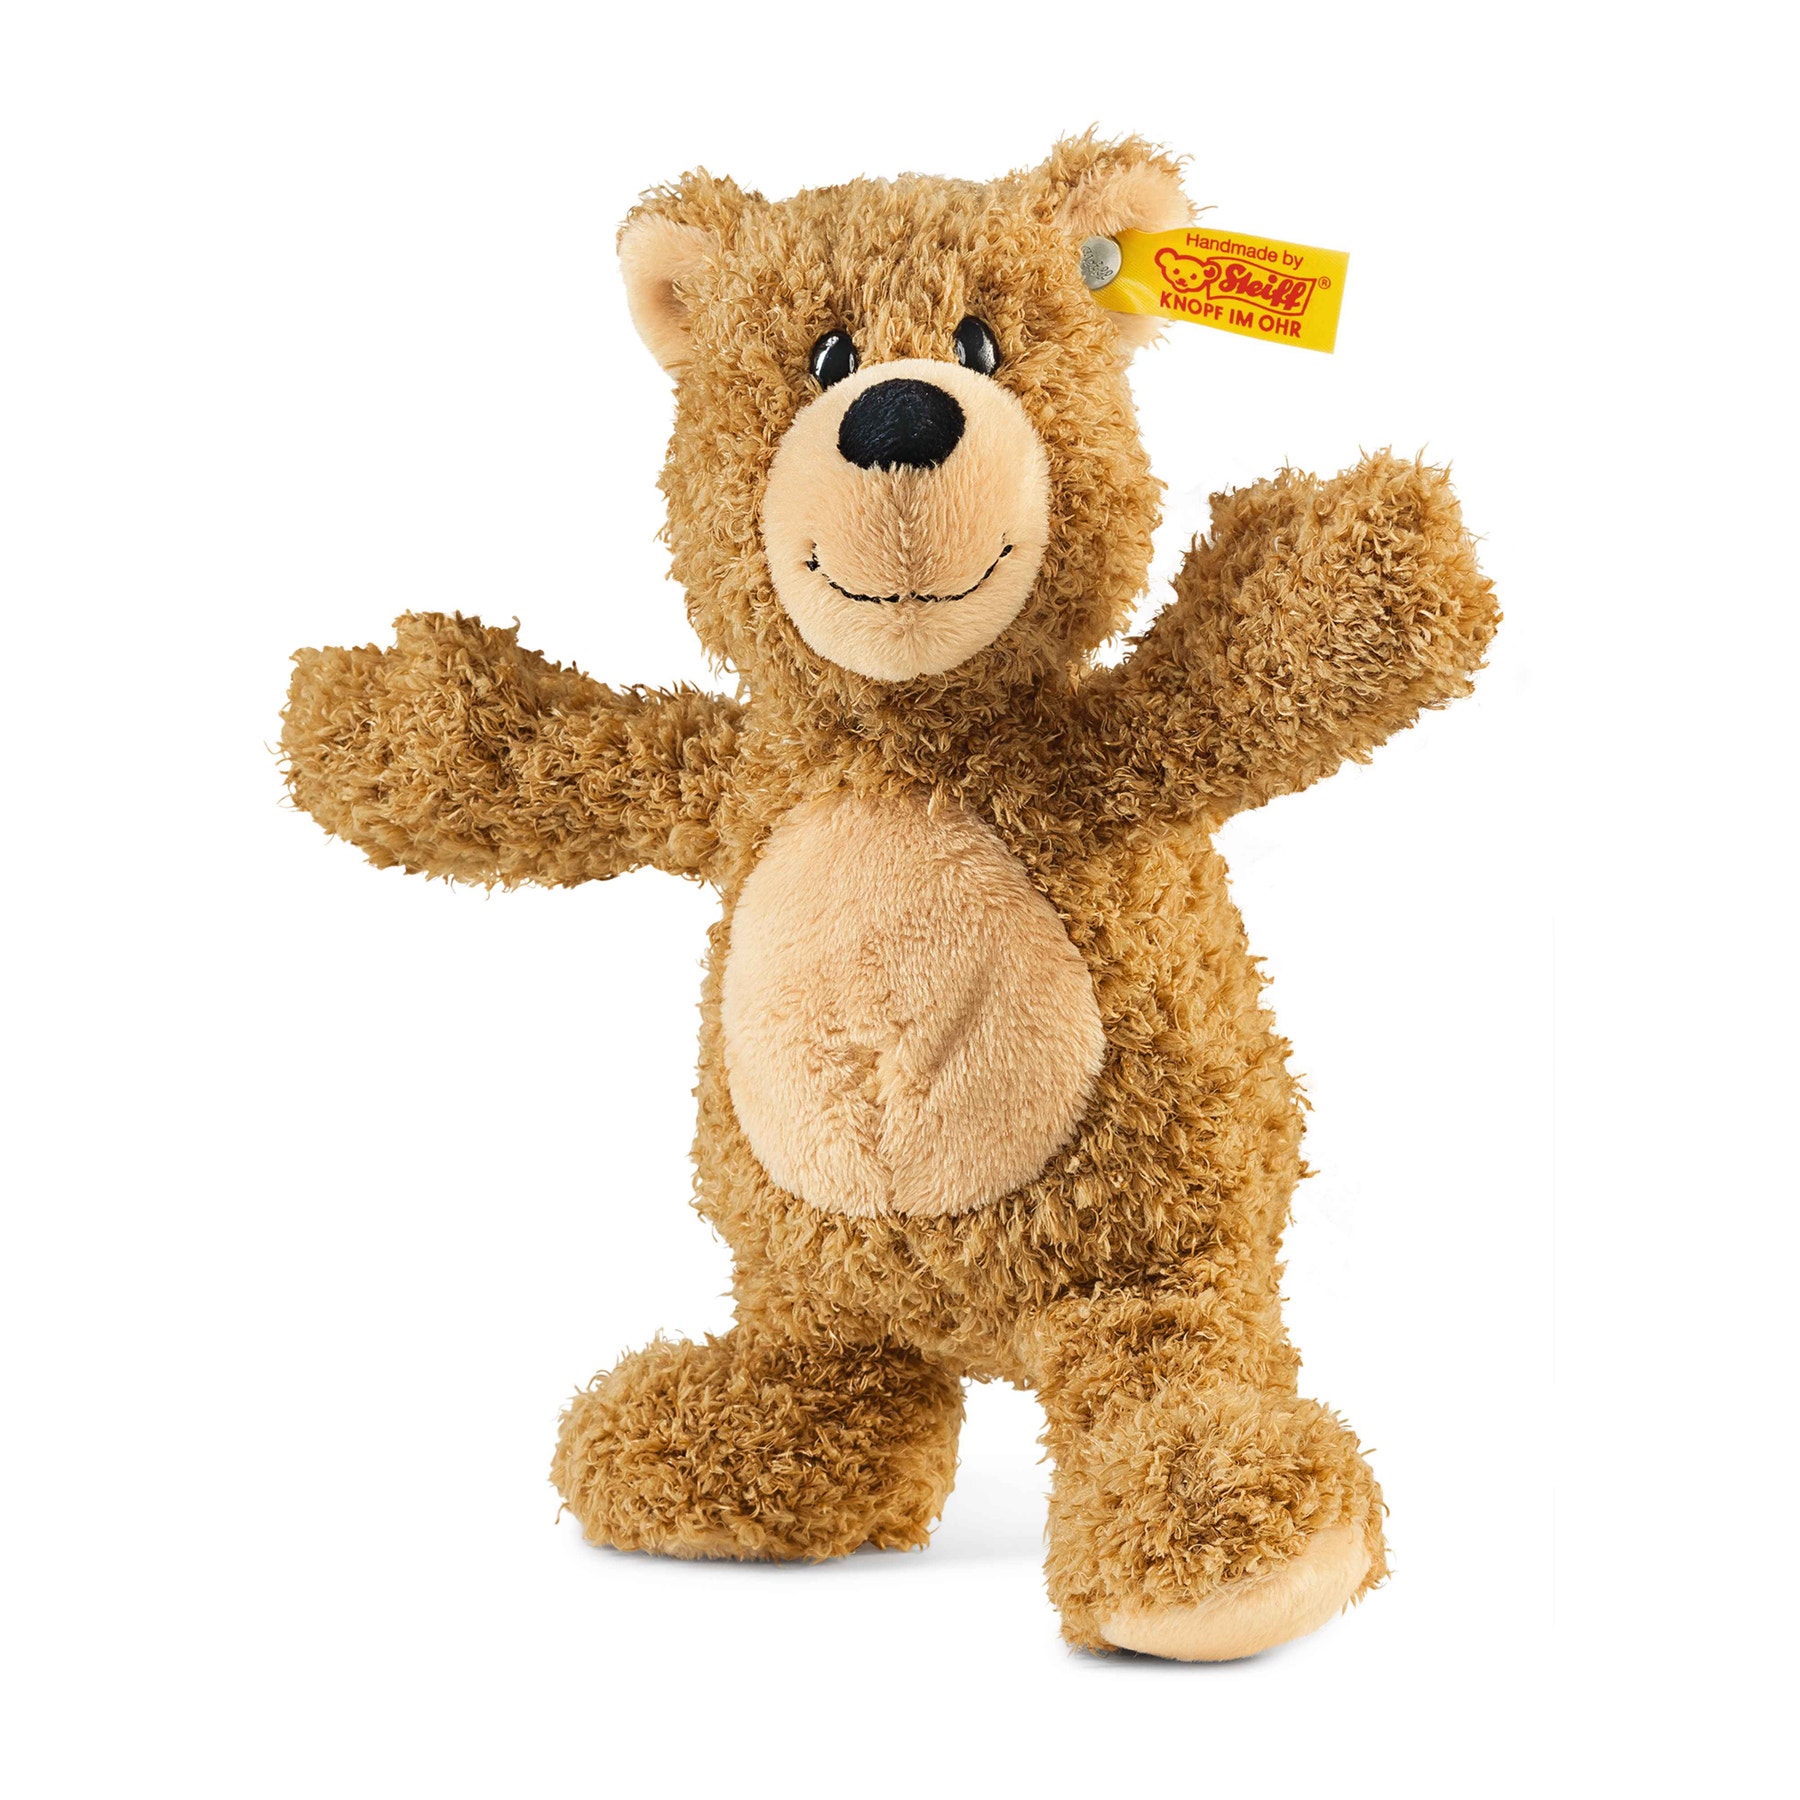 Mr. Honey Teddy bear